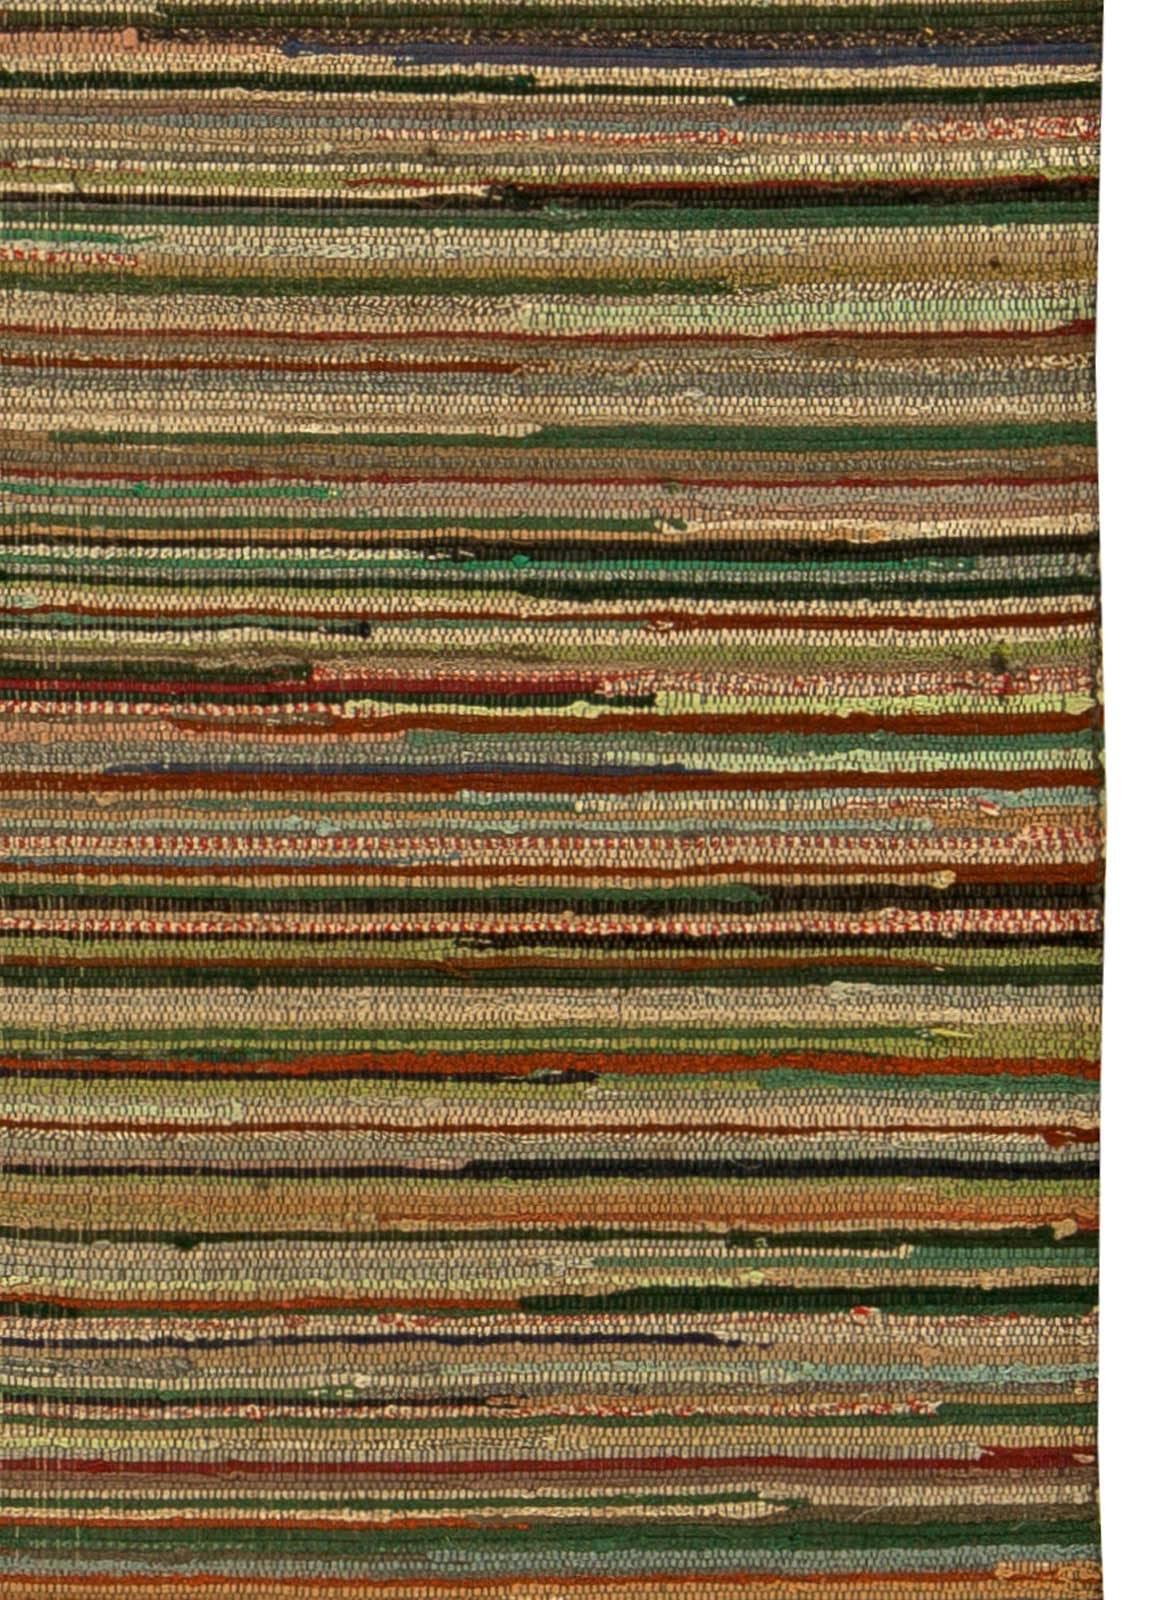 Hand-Knotted Midcentury Geometric Handmade Wool American Rag Rug in Red, Blue, Brown, Yellow